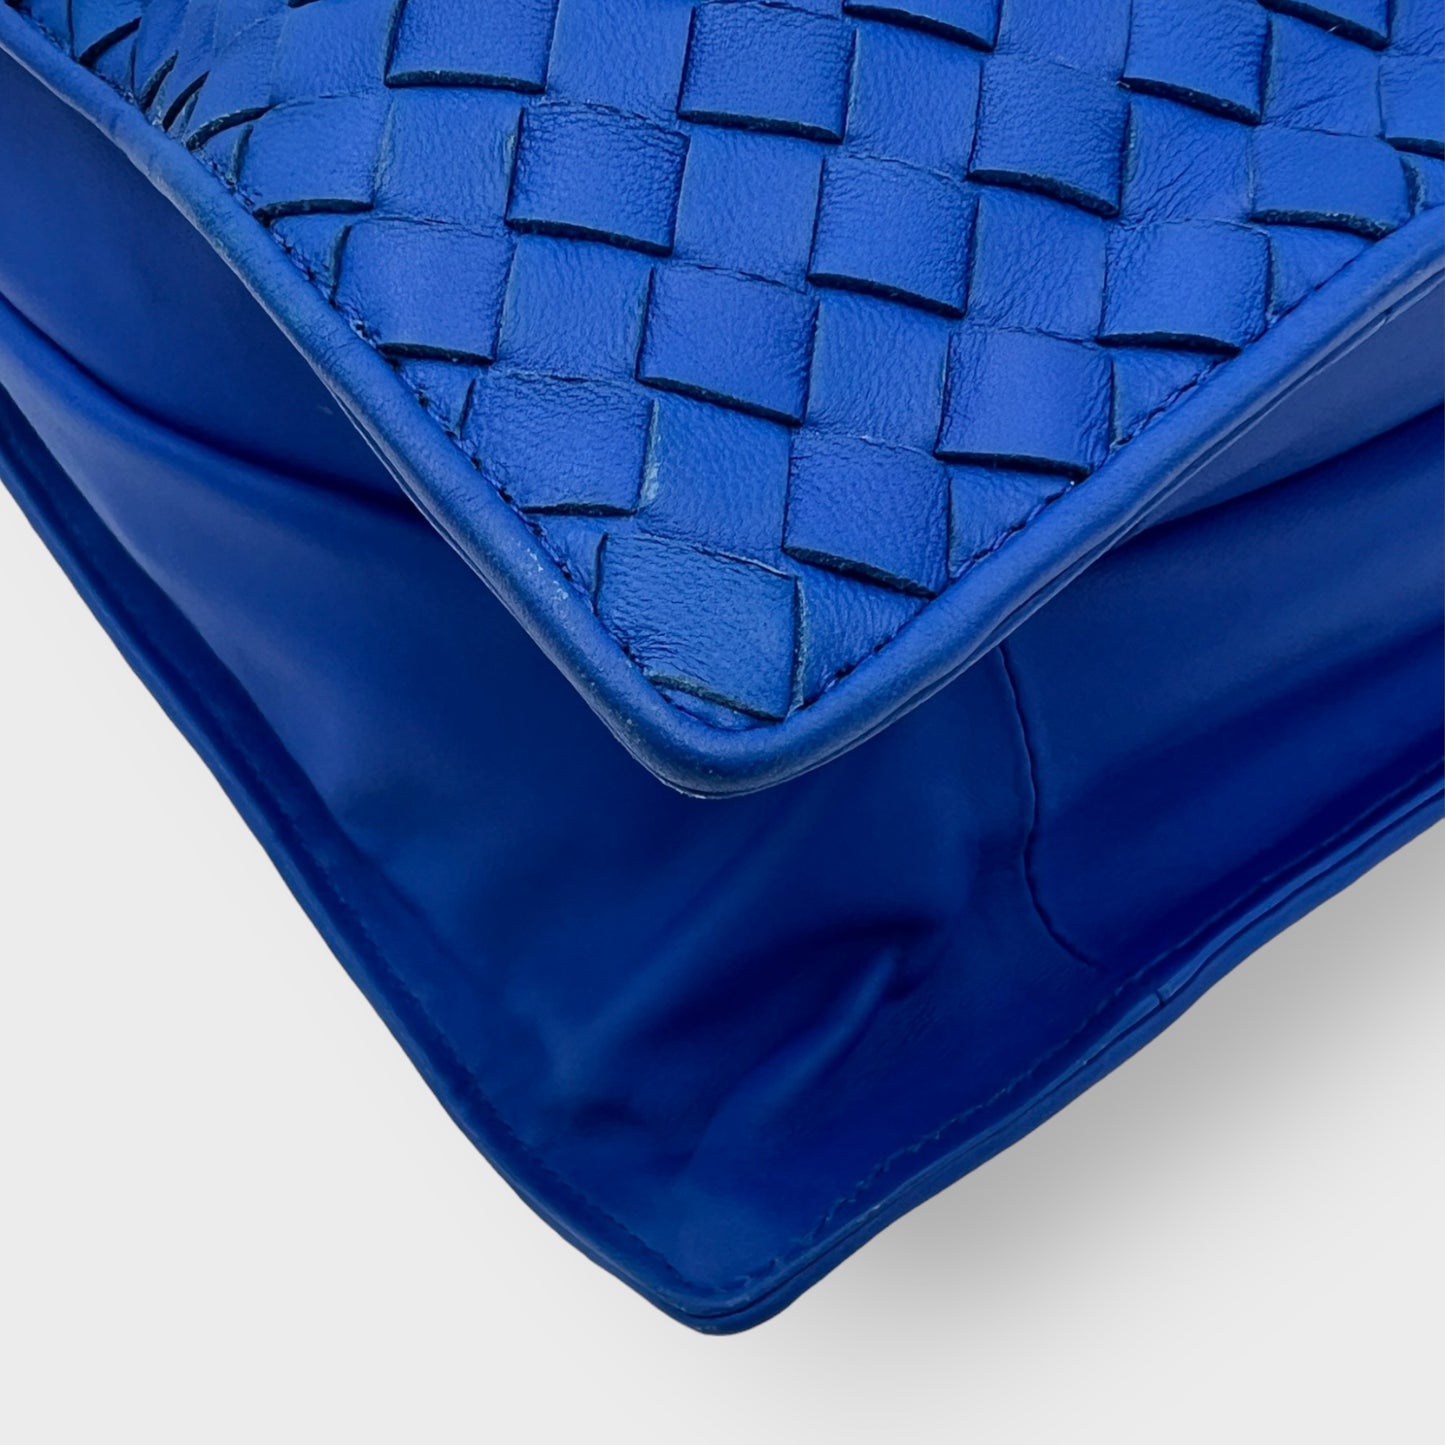 Bottega Veneta Electirc Blue Intrecciato Woven Leather Shoulder Bag